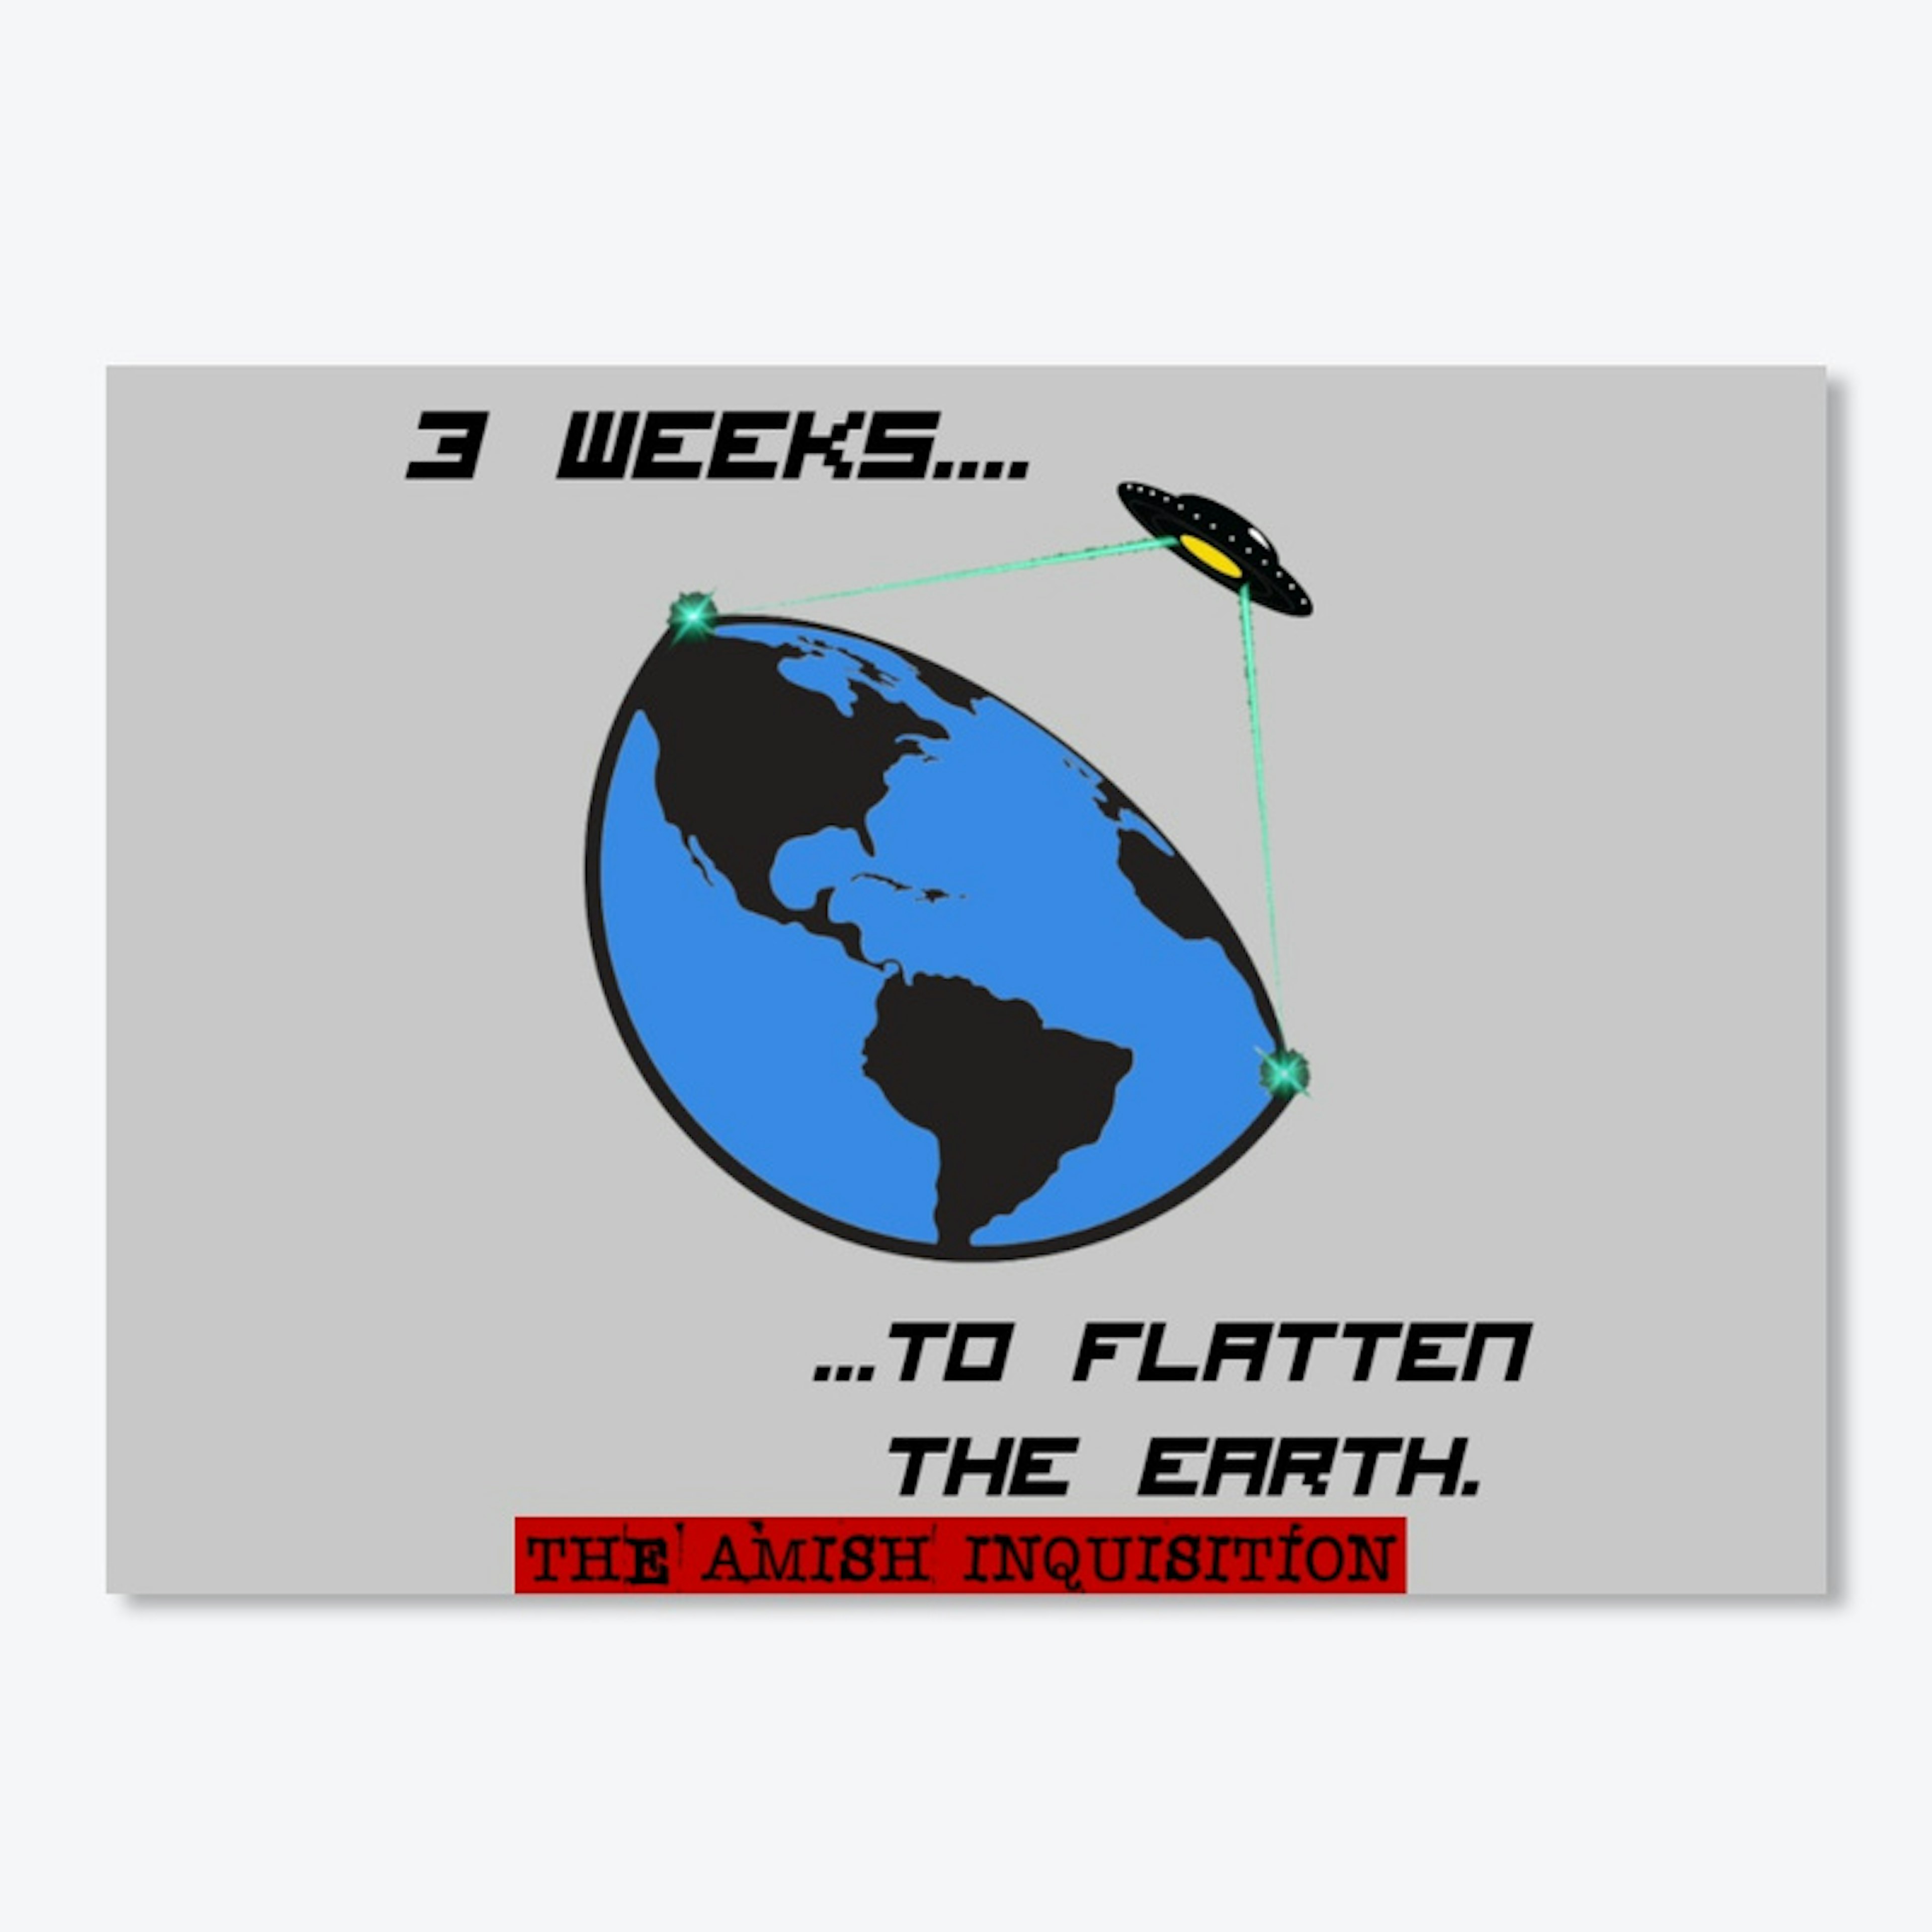 3 weeks...to flatten the earth.